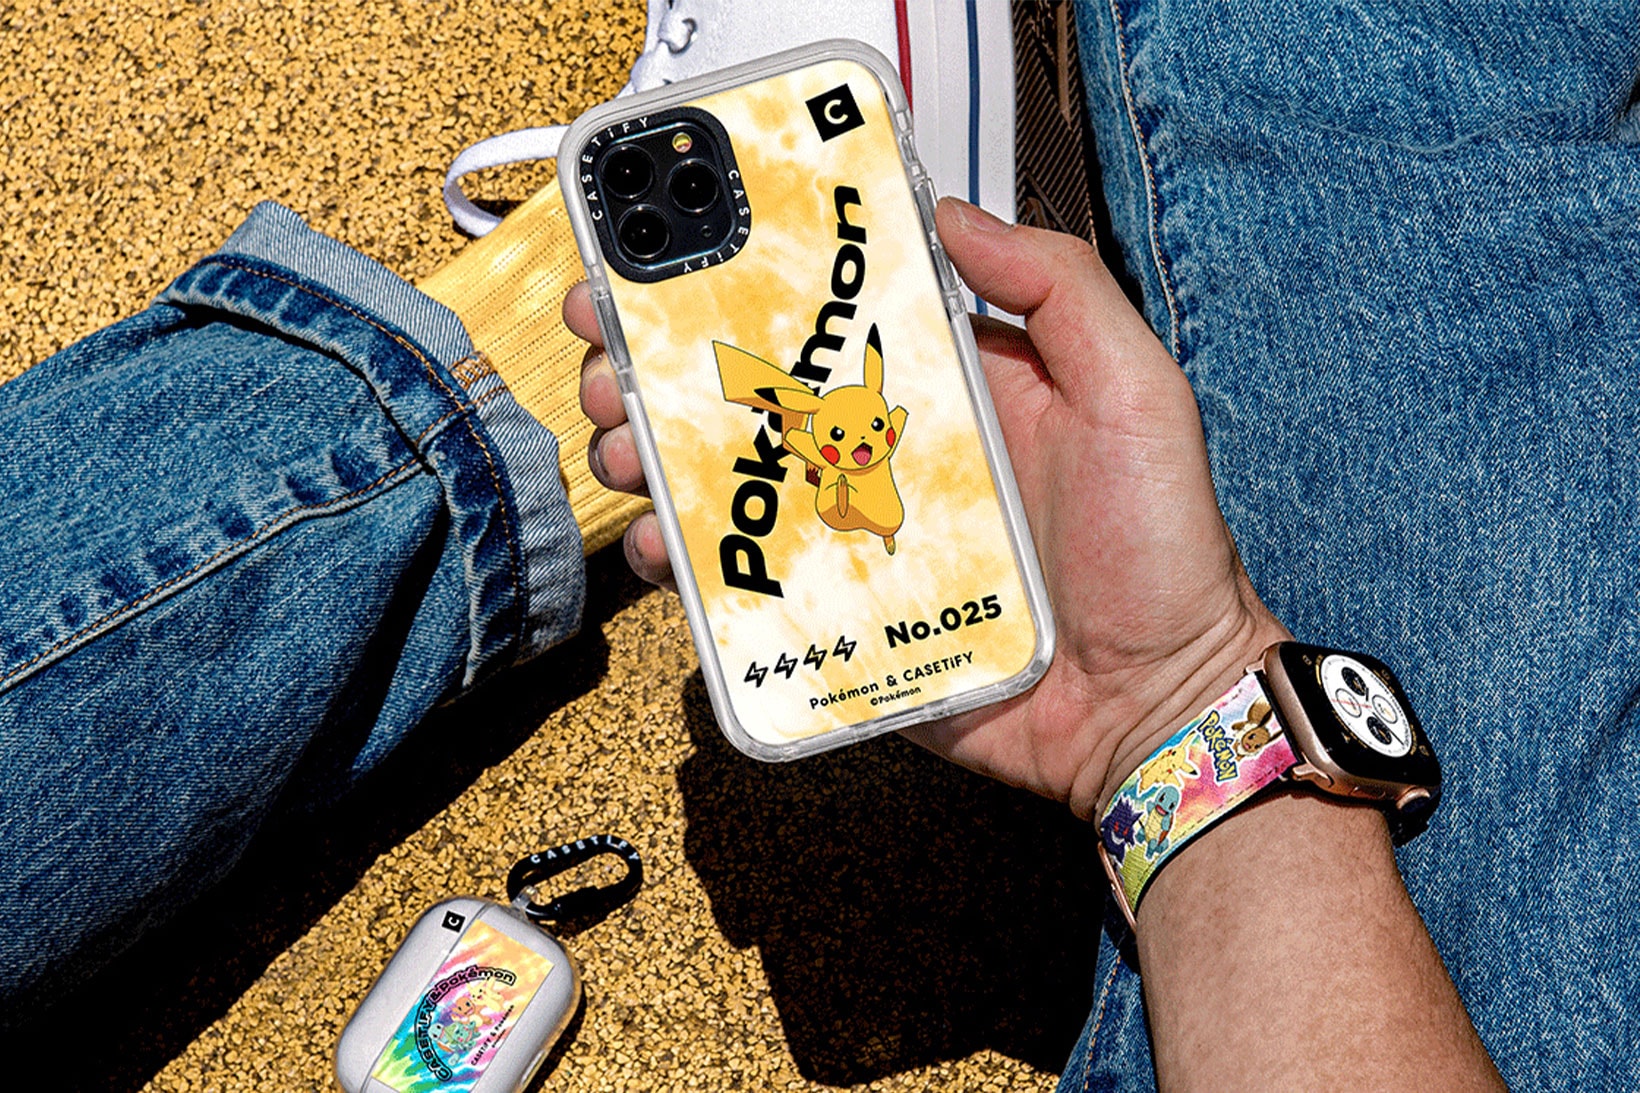 pokemon casetify collaboration iphone airpods ipad macbook cases nintendo pikachu bulbasaur charmander release date info